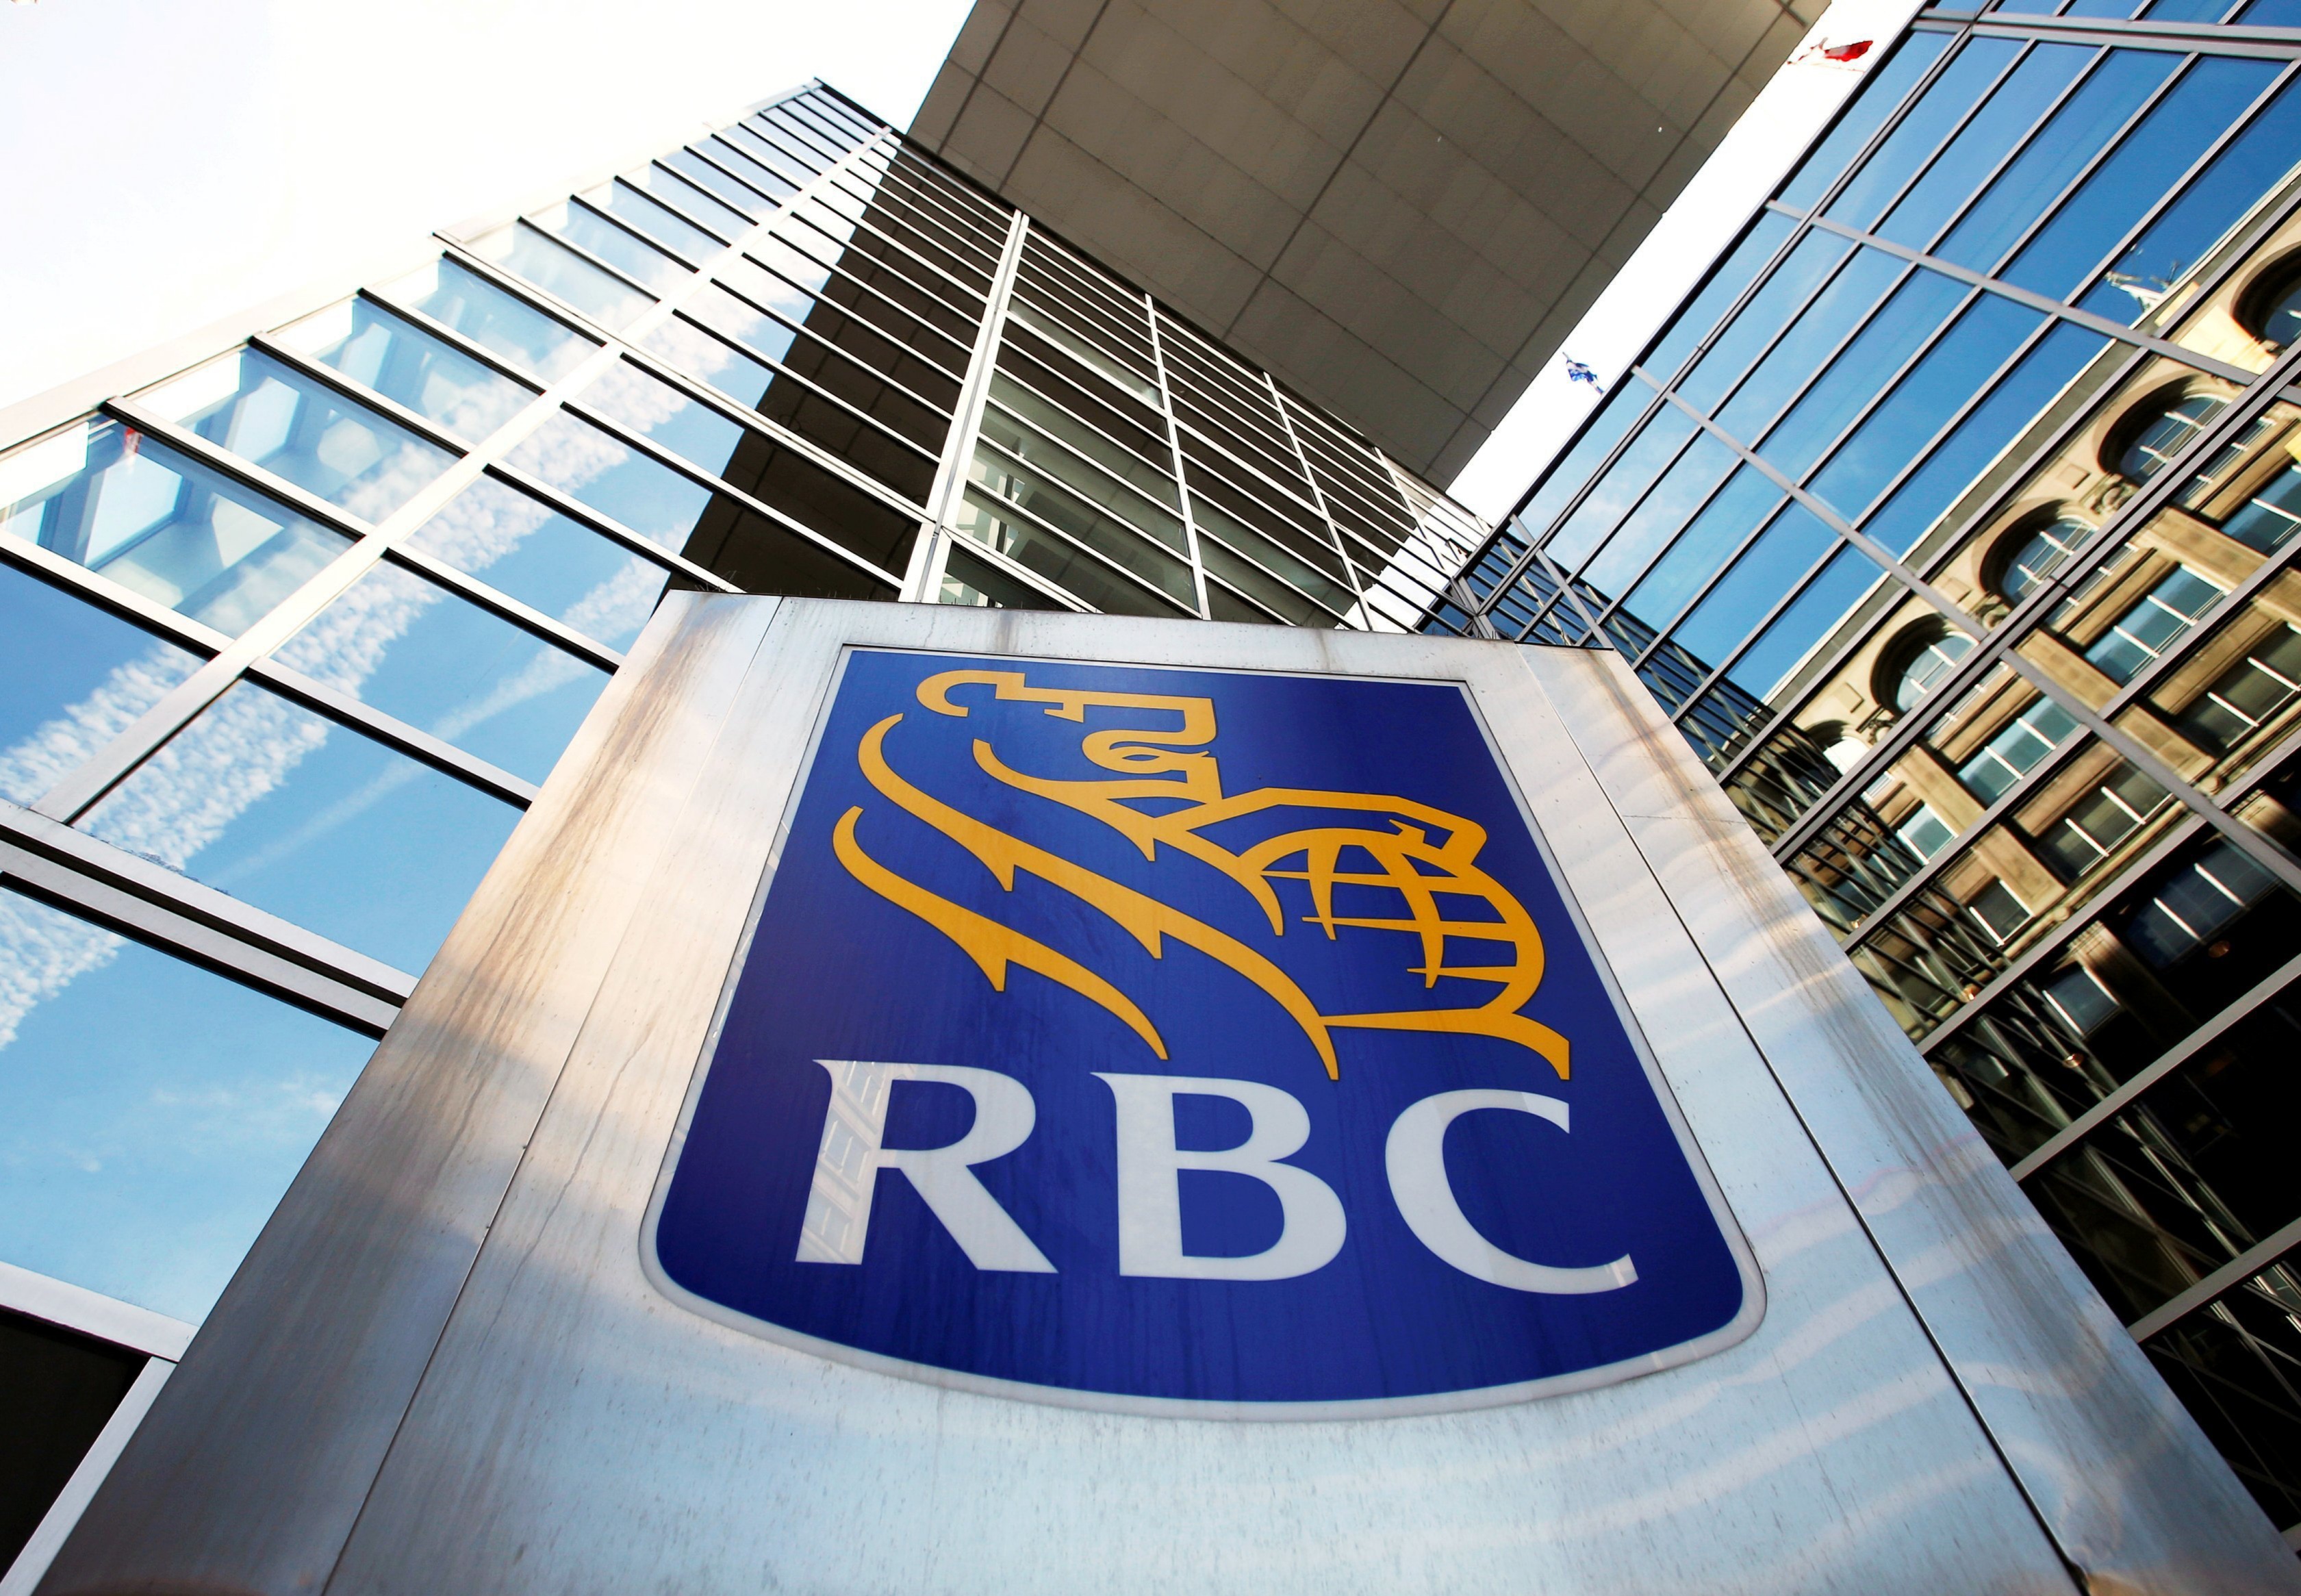 Employment: Royal Bank of Canada seeks financial planner fluent in Igbo or Yoruba language